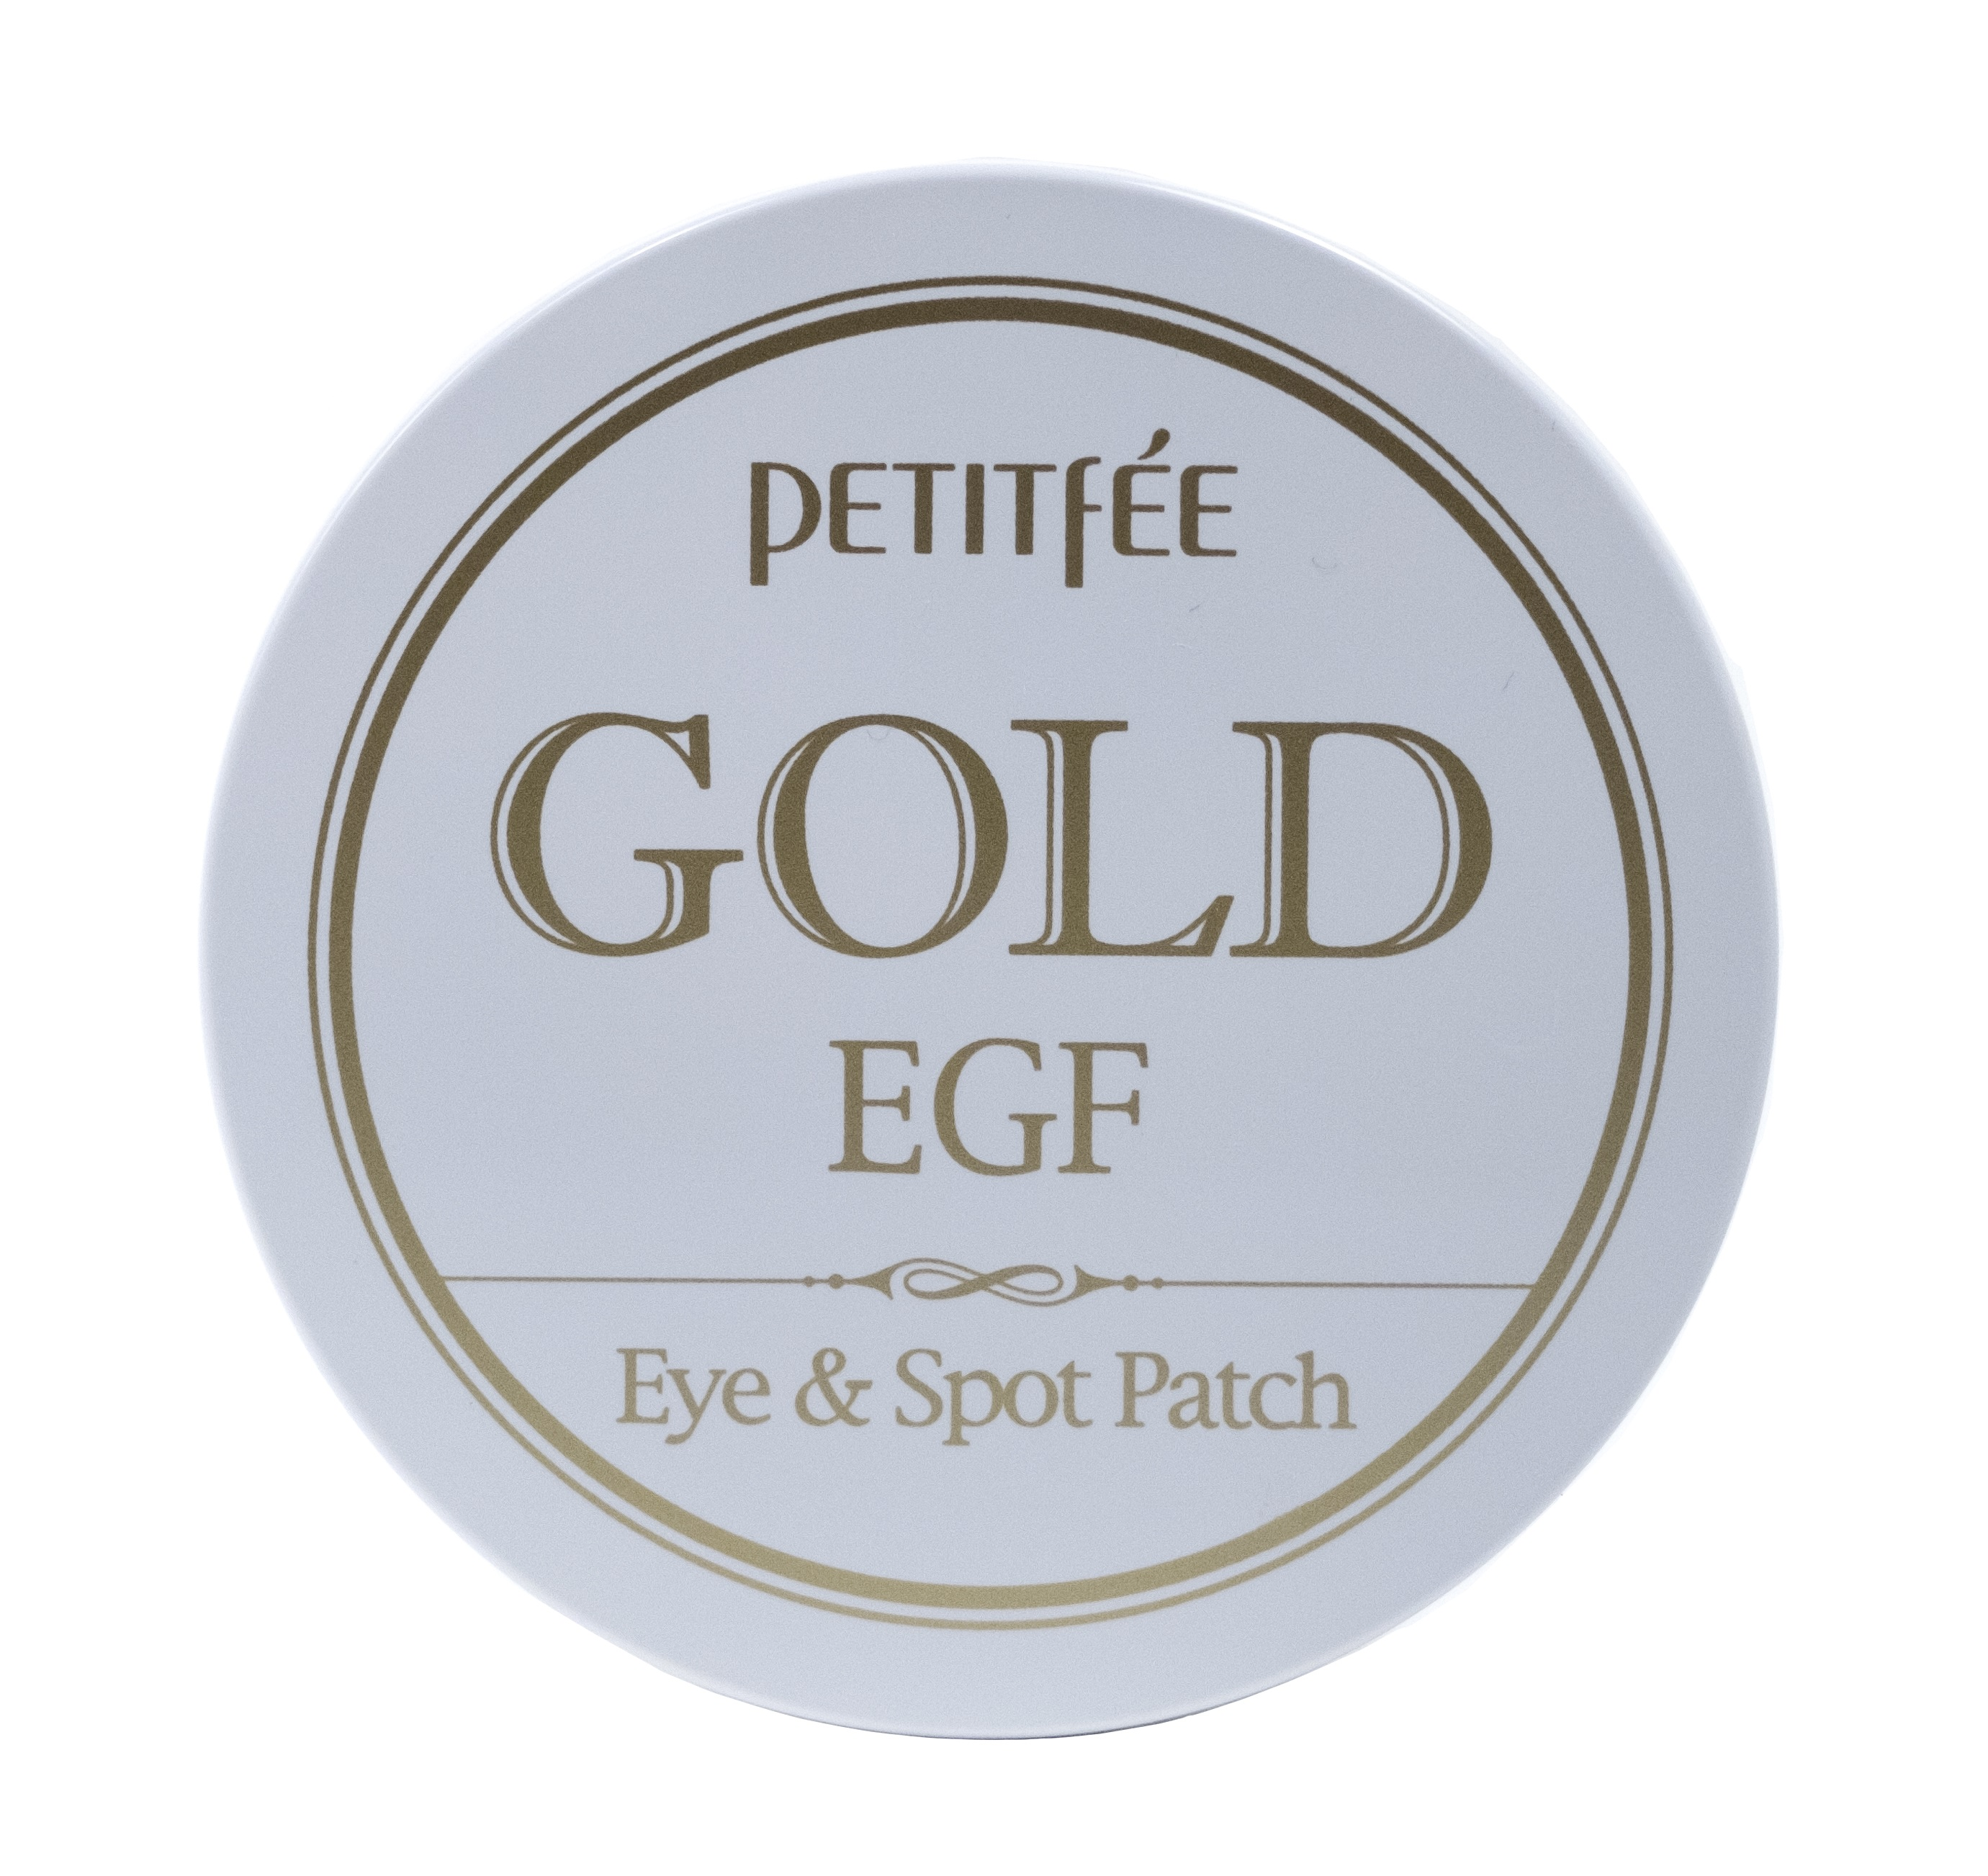 Petitfee gold. Патчи Голд Петитфи EGF. Gold & EGF Eye spot Patch. Гидрогелевые патчи для глаз золото/EGF Gold & EGF Eye&spot Patch. Патчи для глаз Petitfee гидрогелевые с золотом Gold.